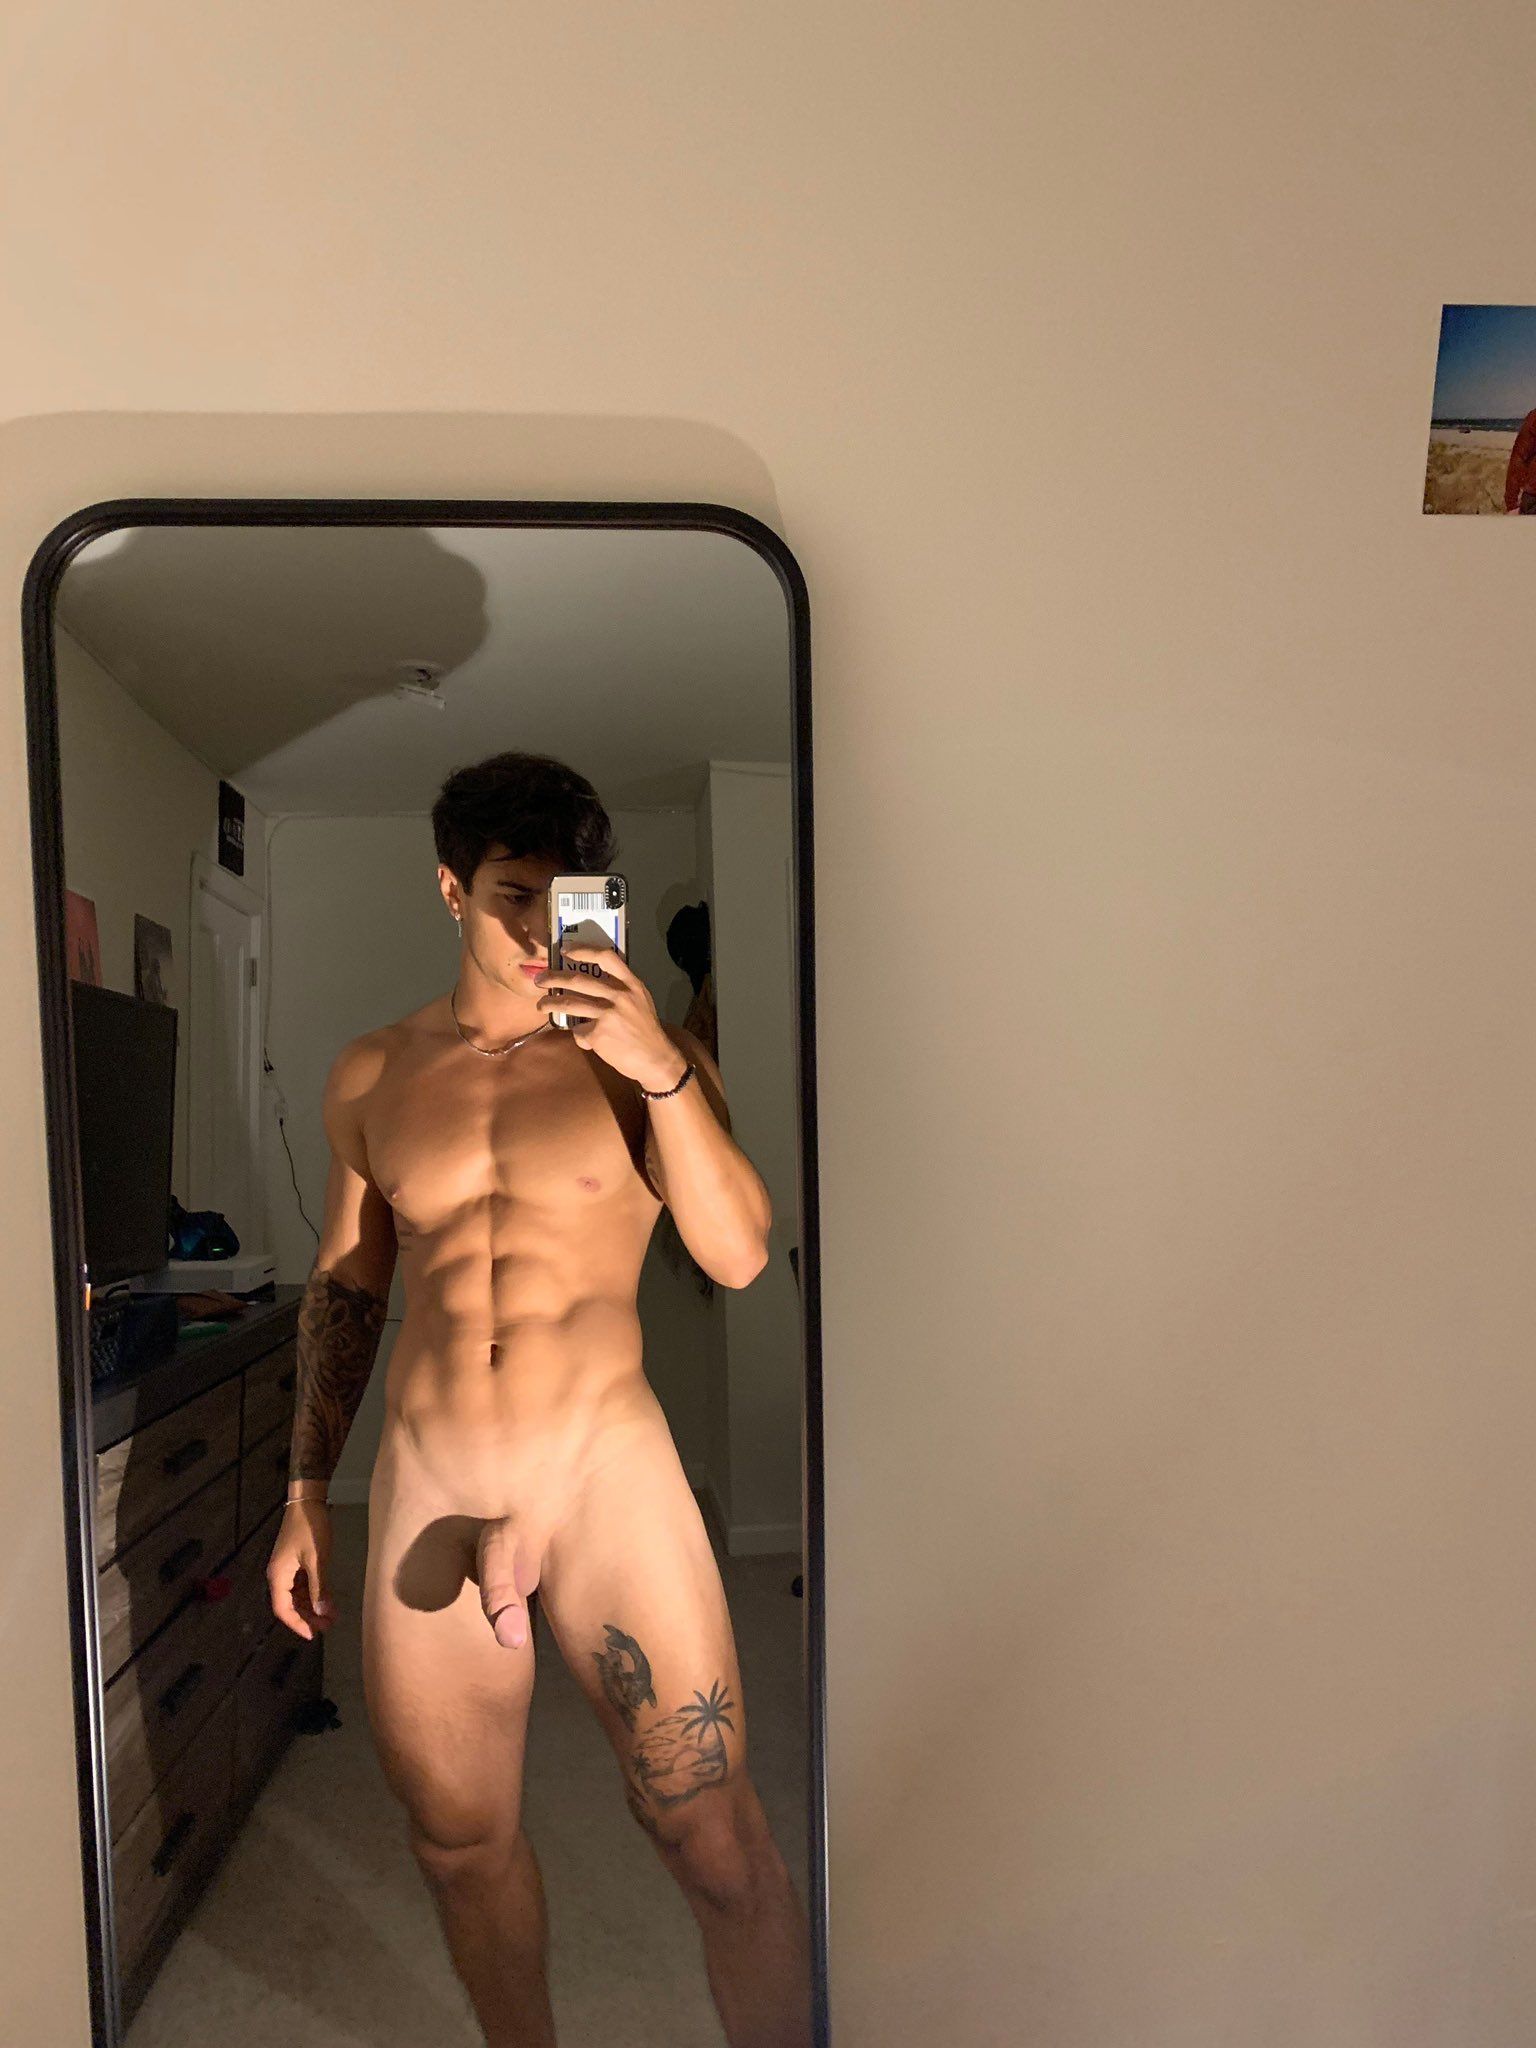 Evan Lamicella Leaked Nudes nude pic, sex photos Tiktoker Evan Lamicella Le...